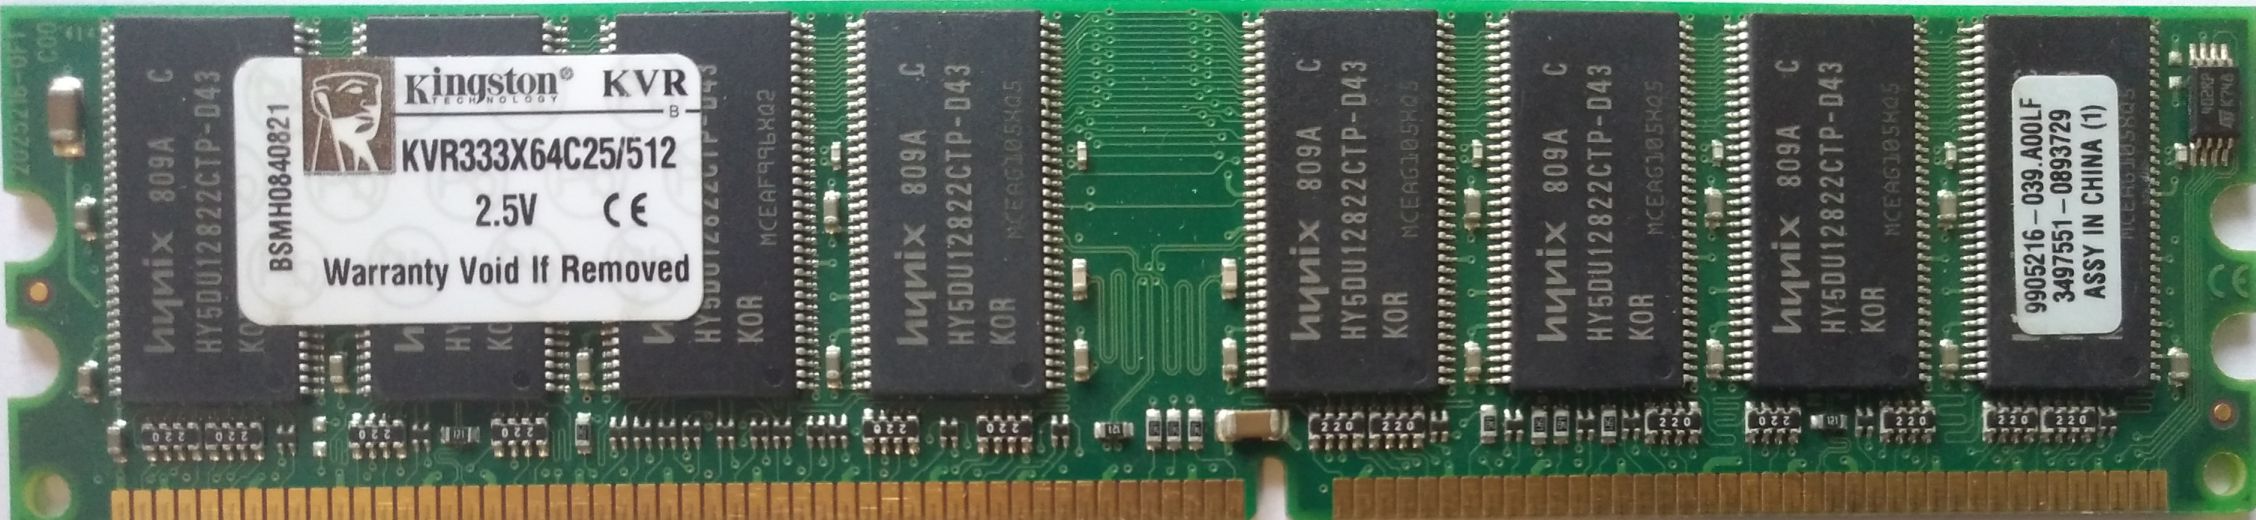 DDR 512MB 333Mhz-PC2700 / Kingston KVR333X64C25/512